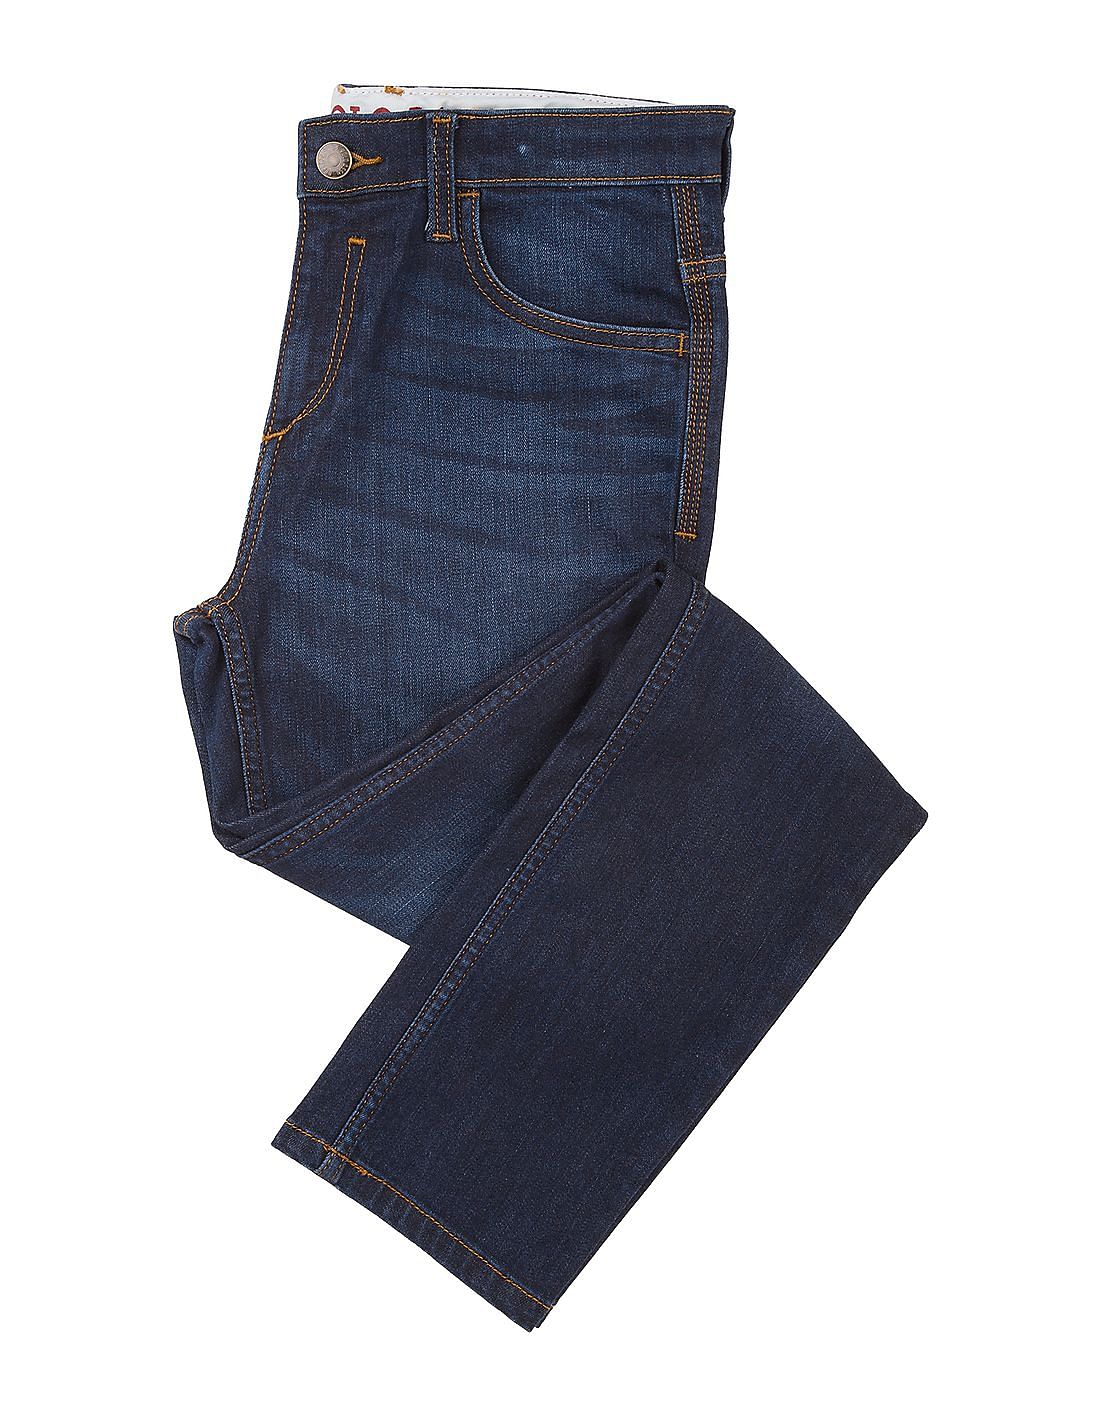 Buy U.S. Polo Assn. Kids Boys Boys Adjustable Waist Regular Fit Jeans ...